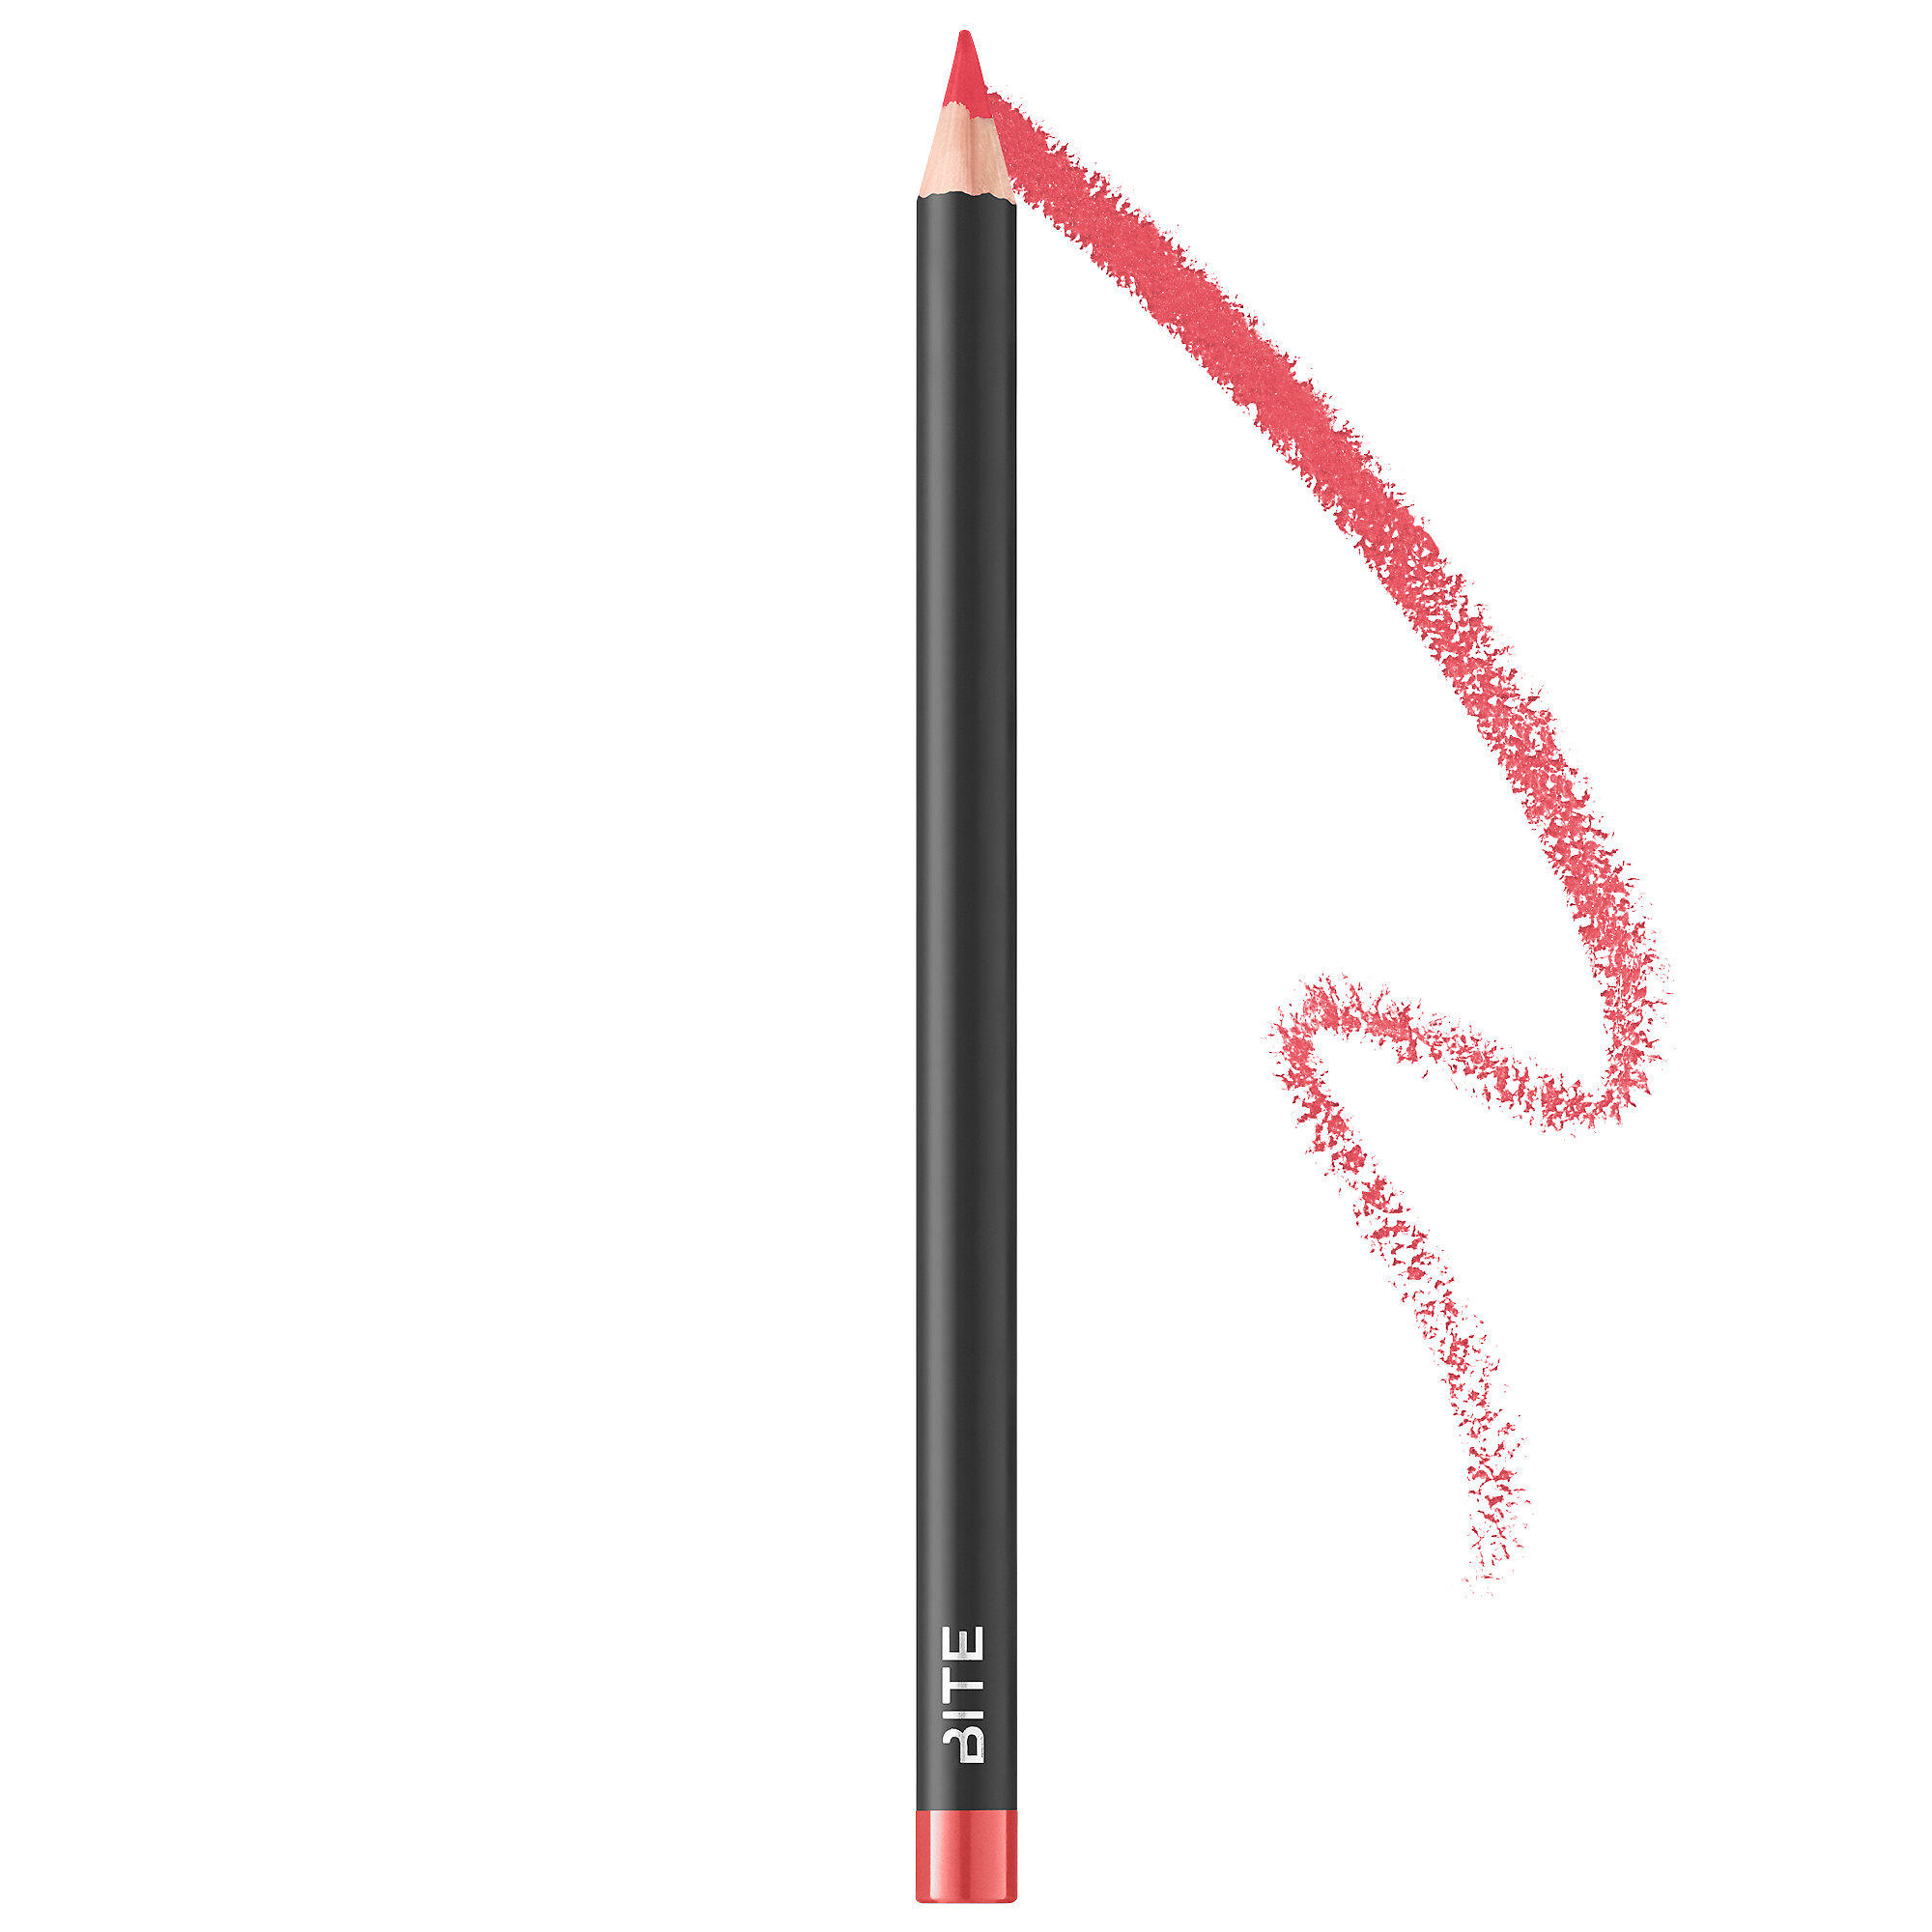 Bite Beauty The Lip Pencil Bright Coral Pink 066